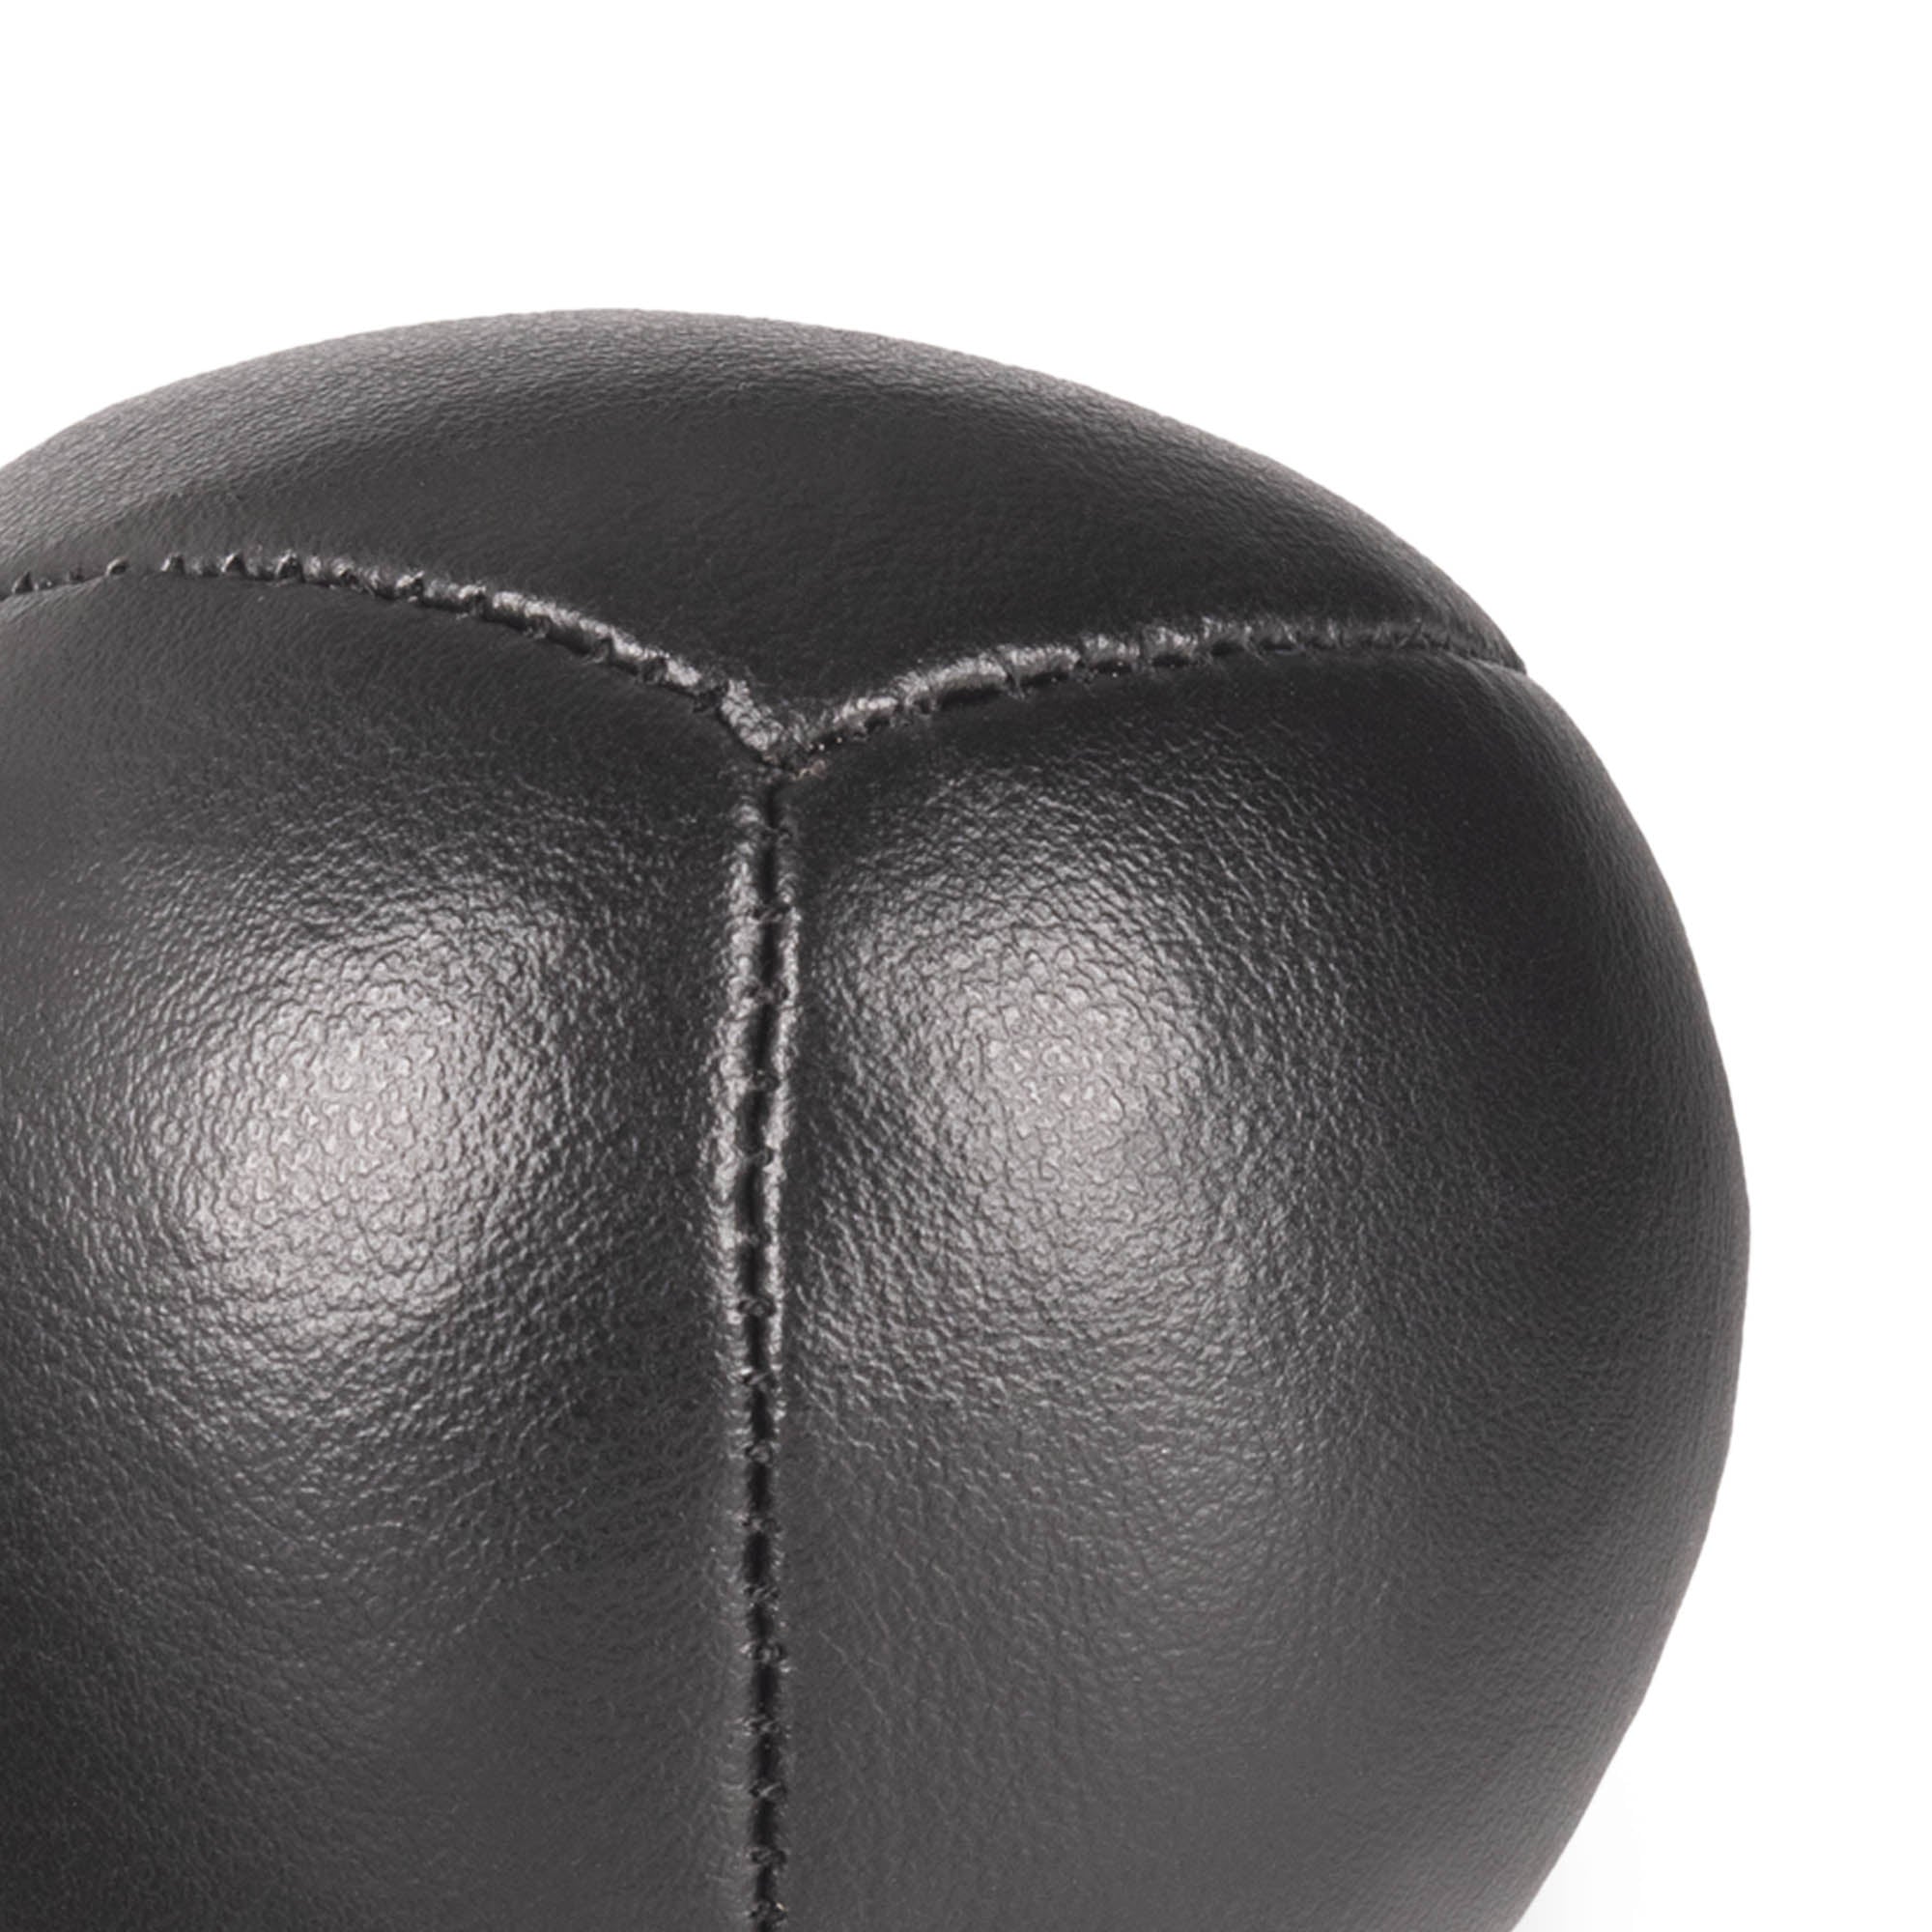 Firetoys 110g thud juggling ball, close up stitching black